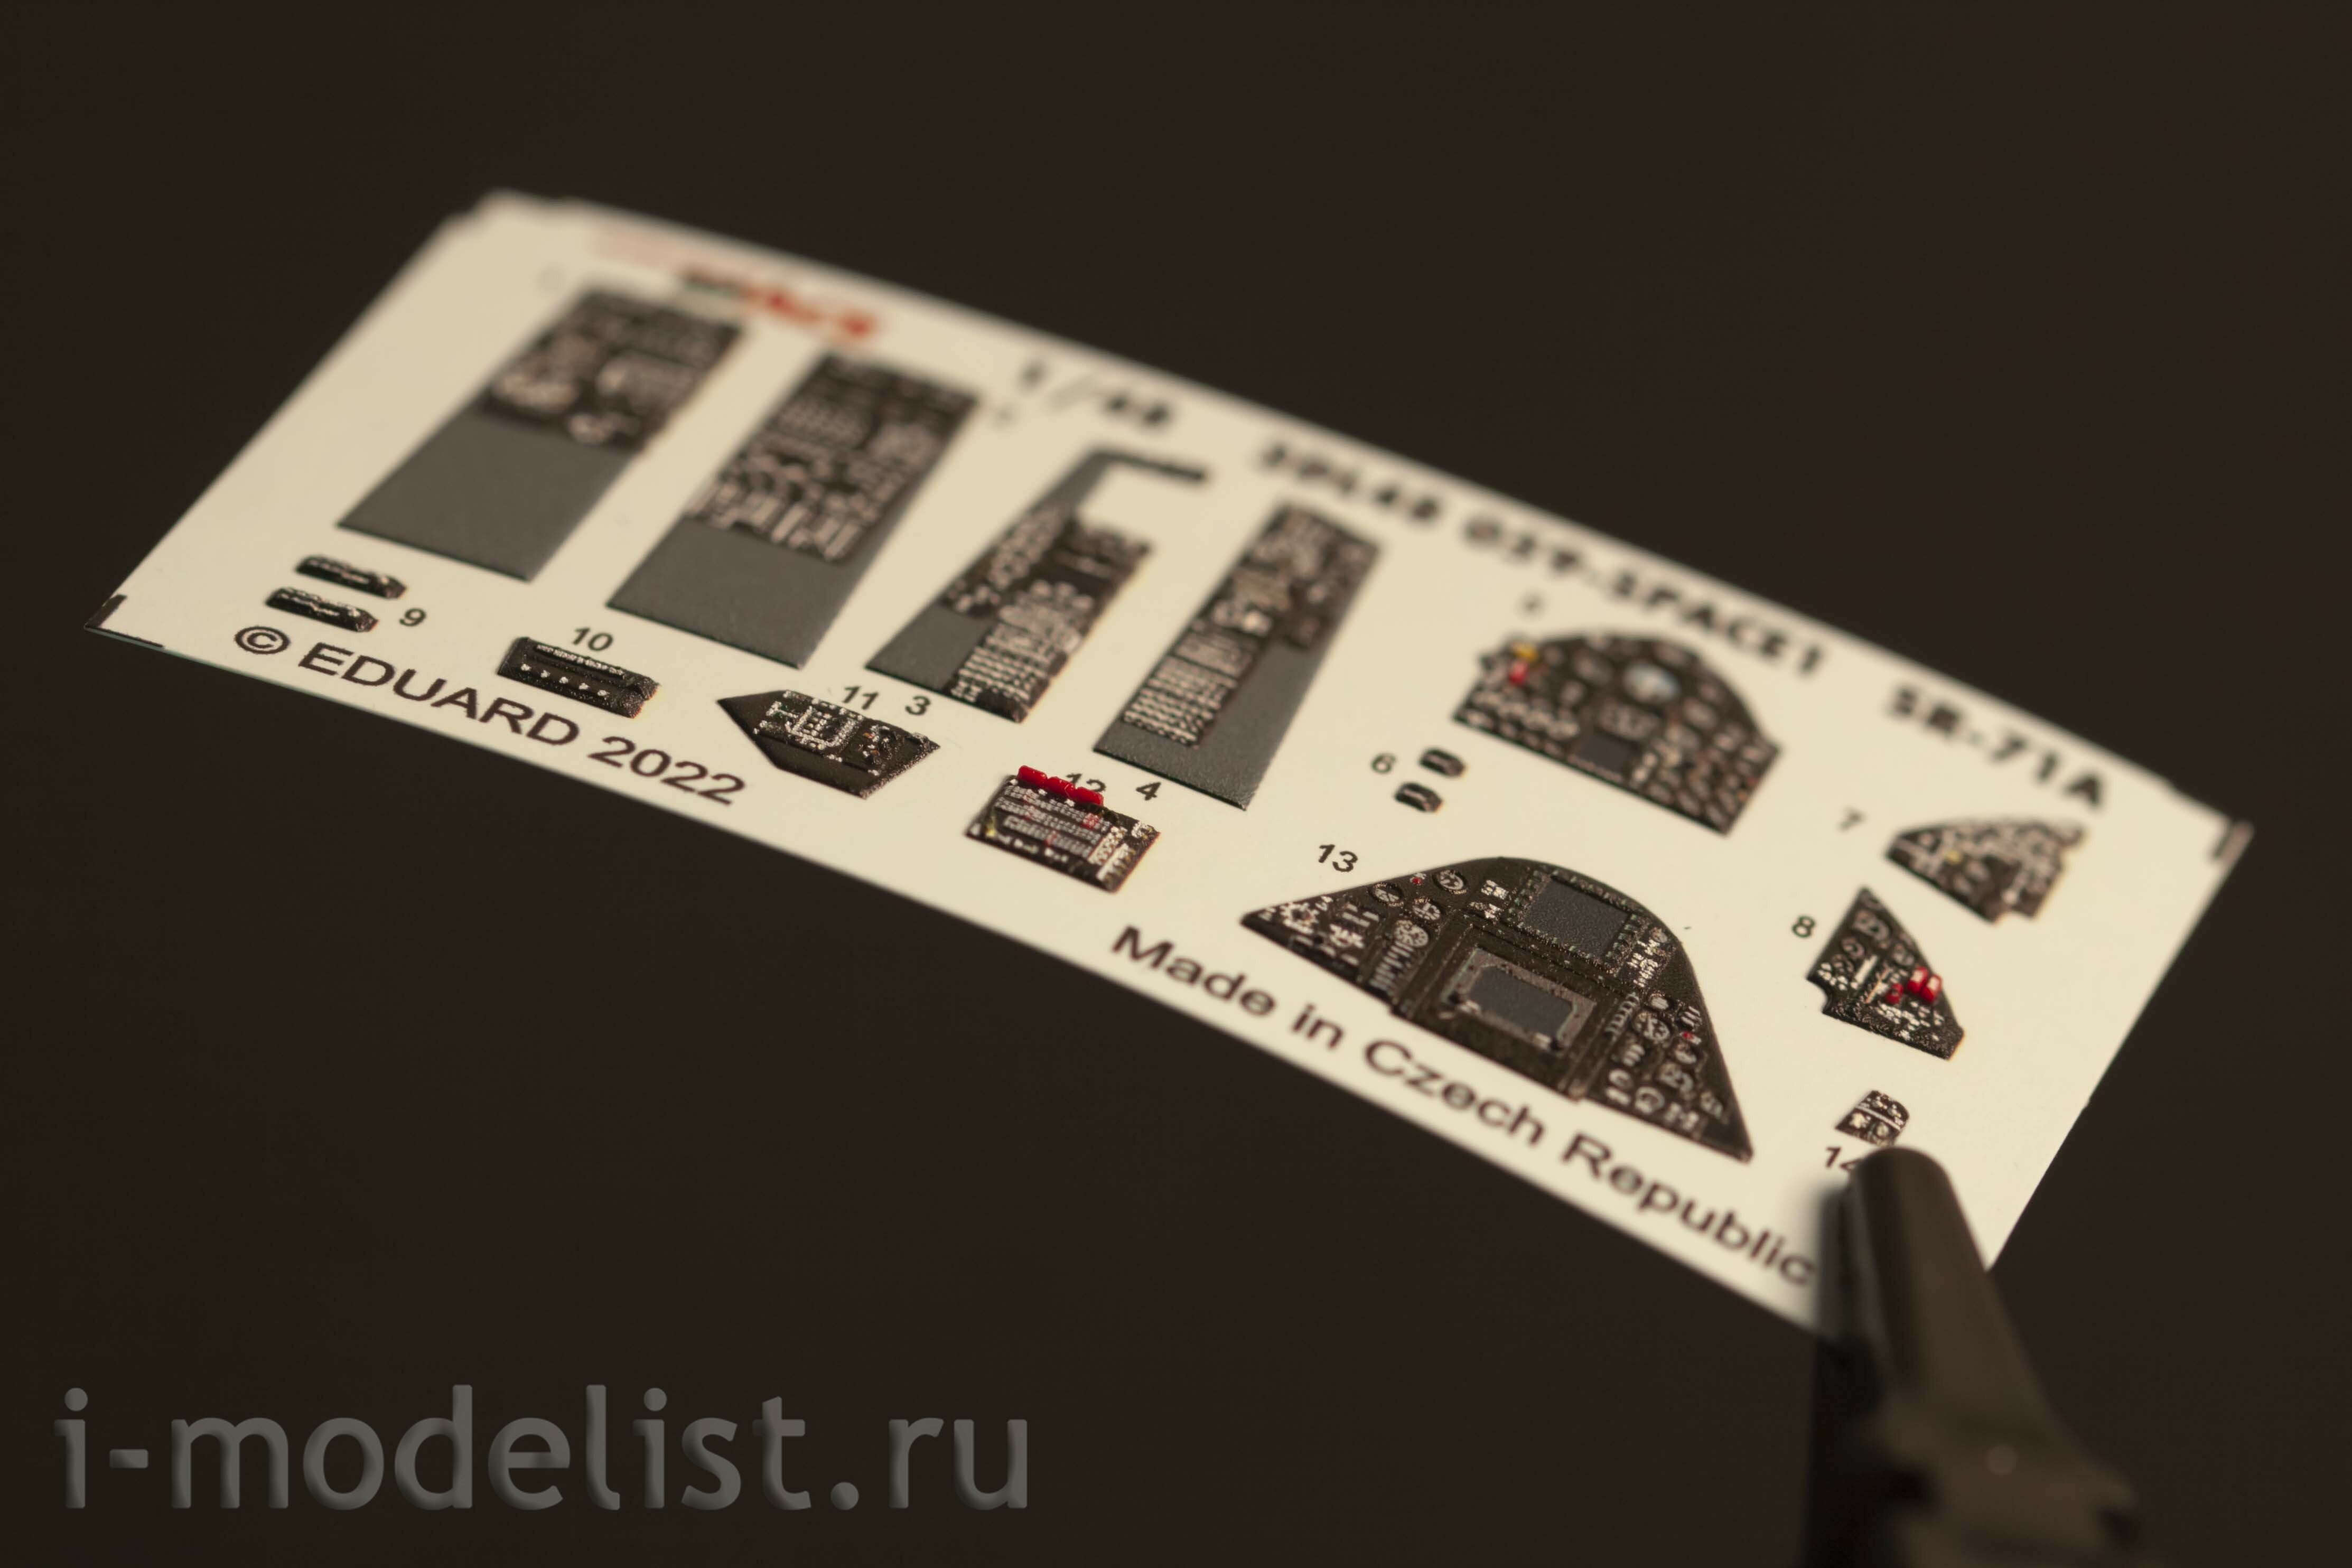 3DL48059 Eduard 1/48 3D Decals for SR-71A SPACE